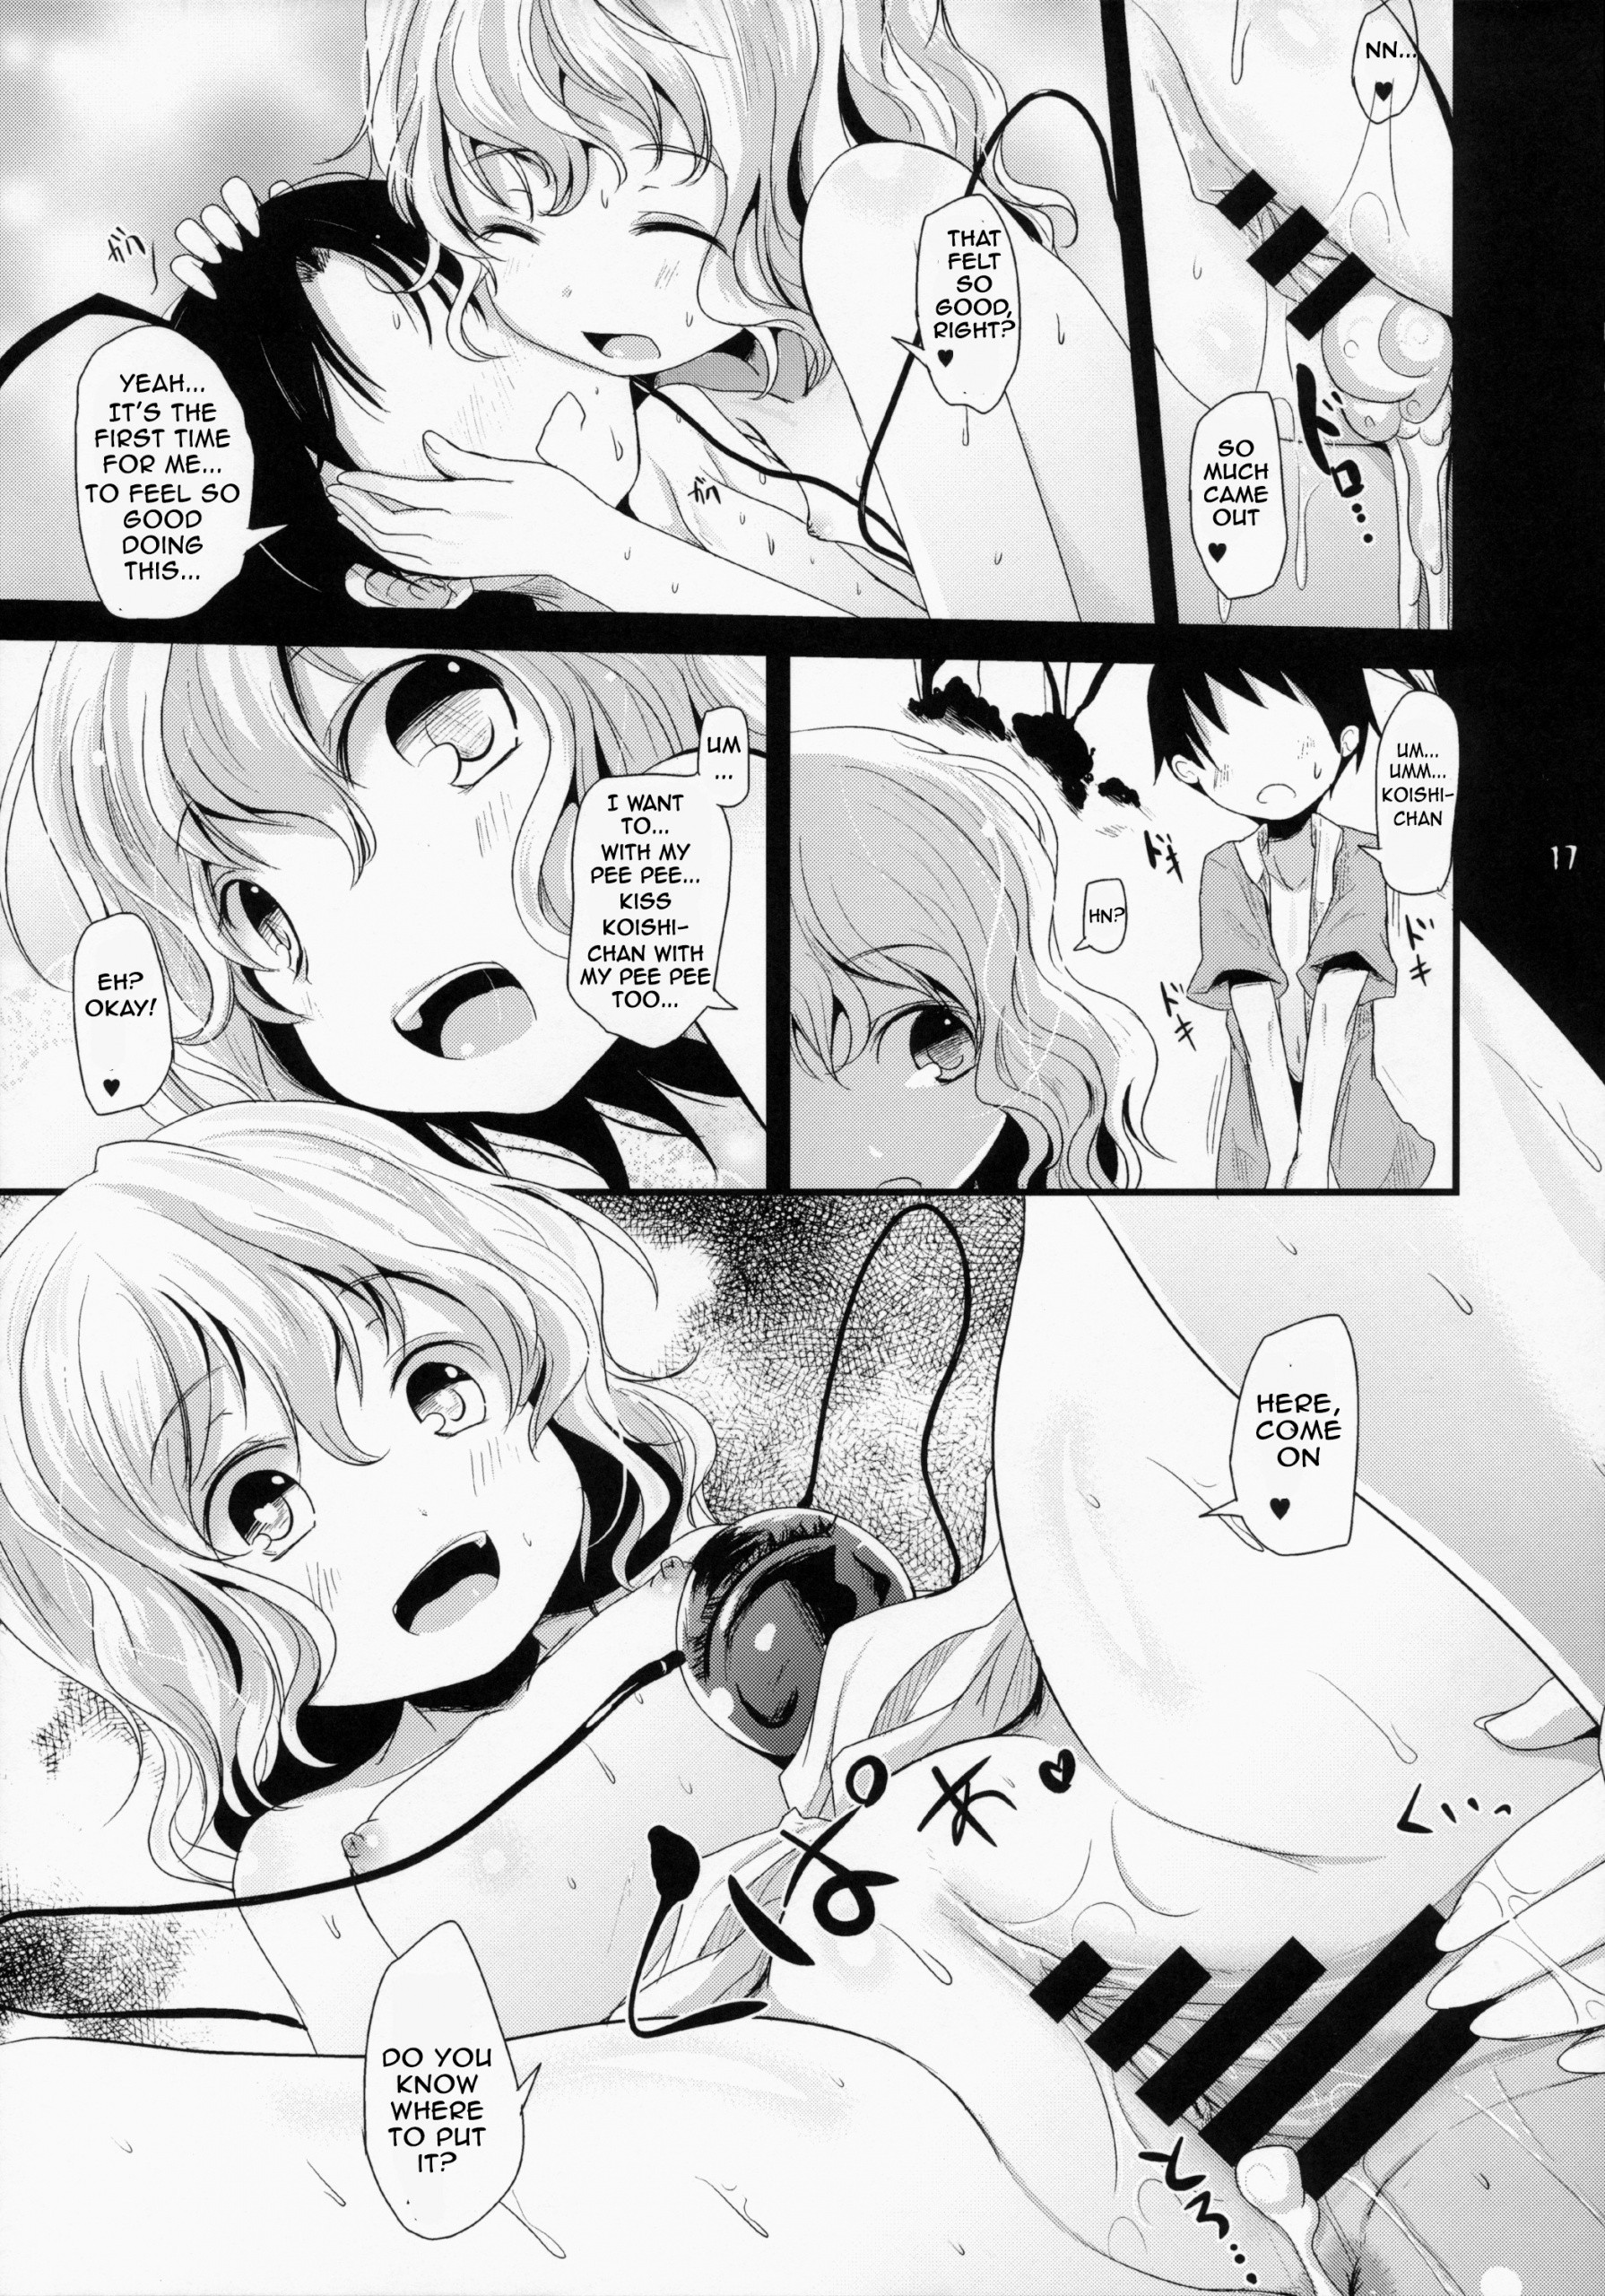 Koishi-Chan Let's Play hentai manga picture 16